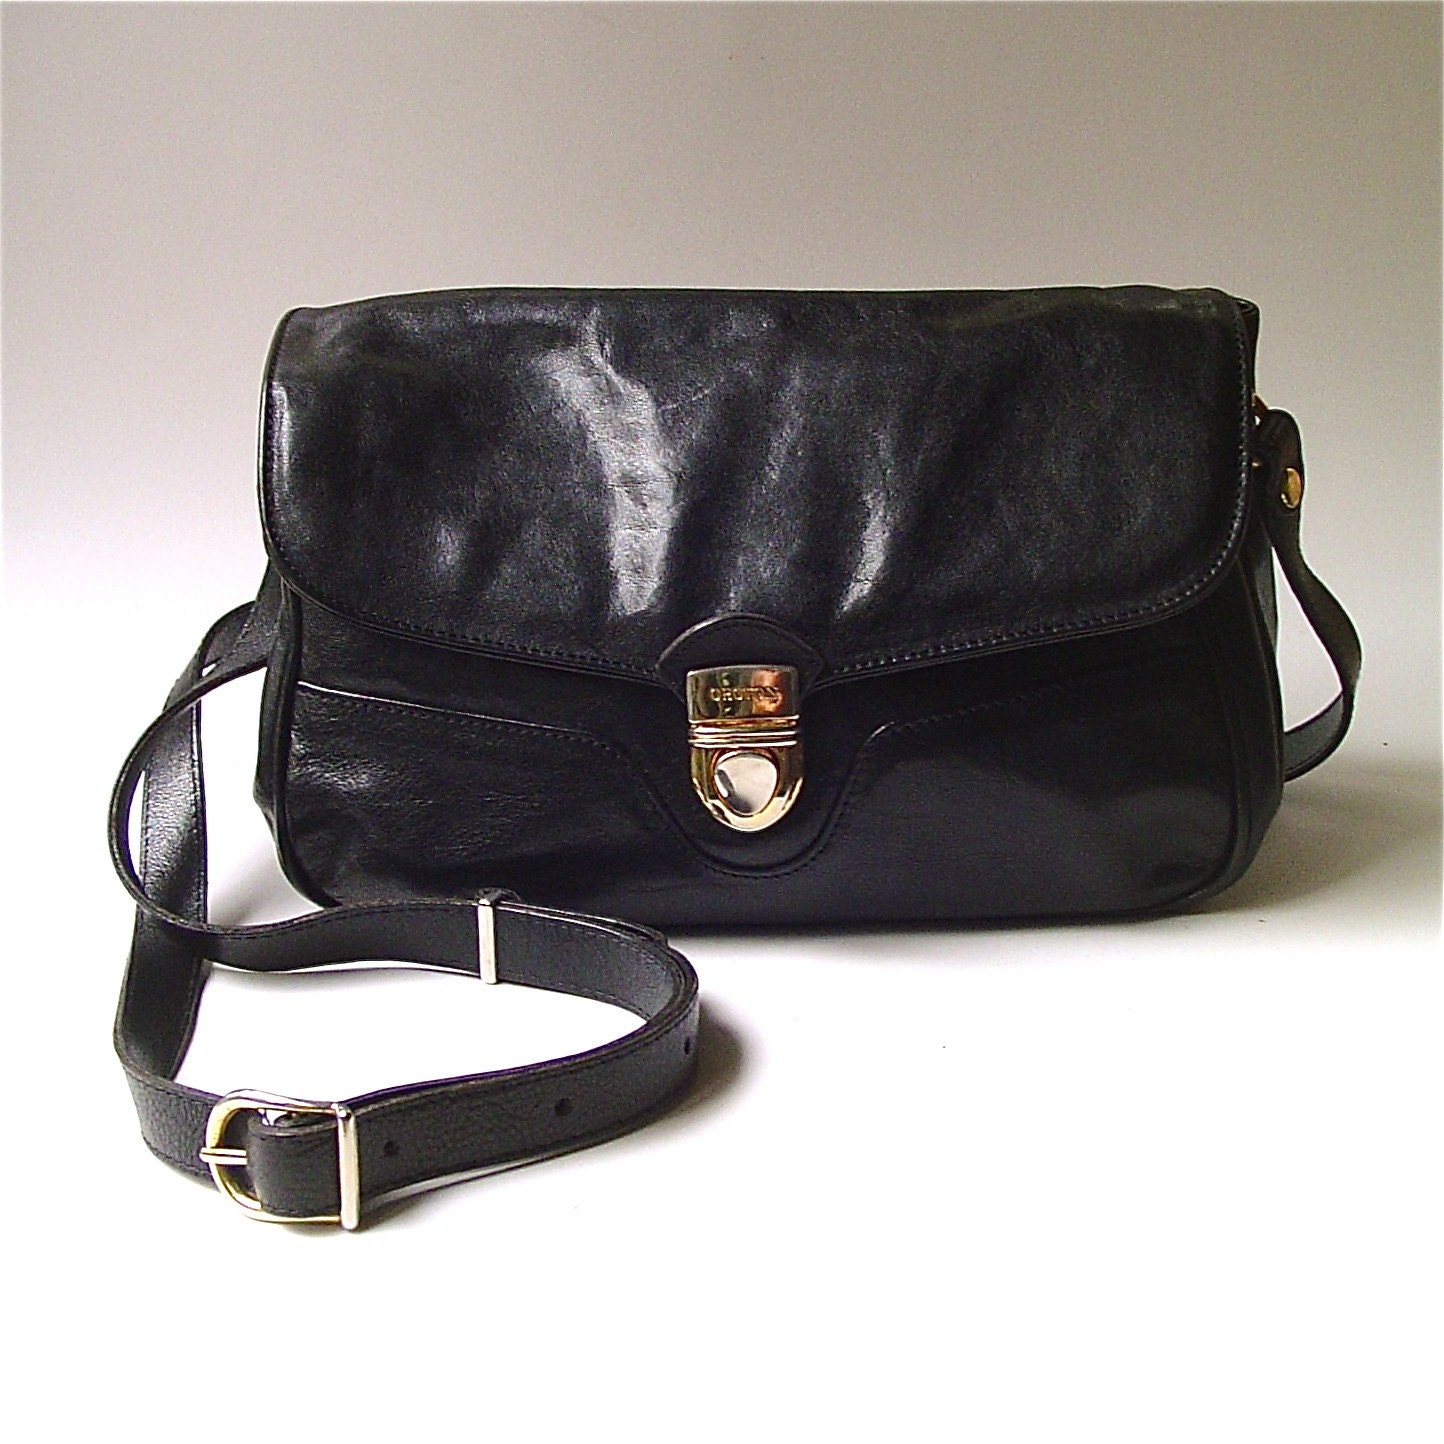 vintage Oroton Black Leather Purse by SkinnyandBernie on Etsy